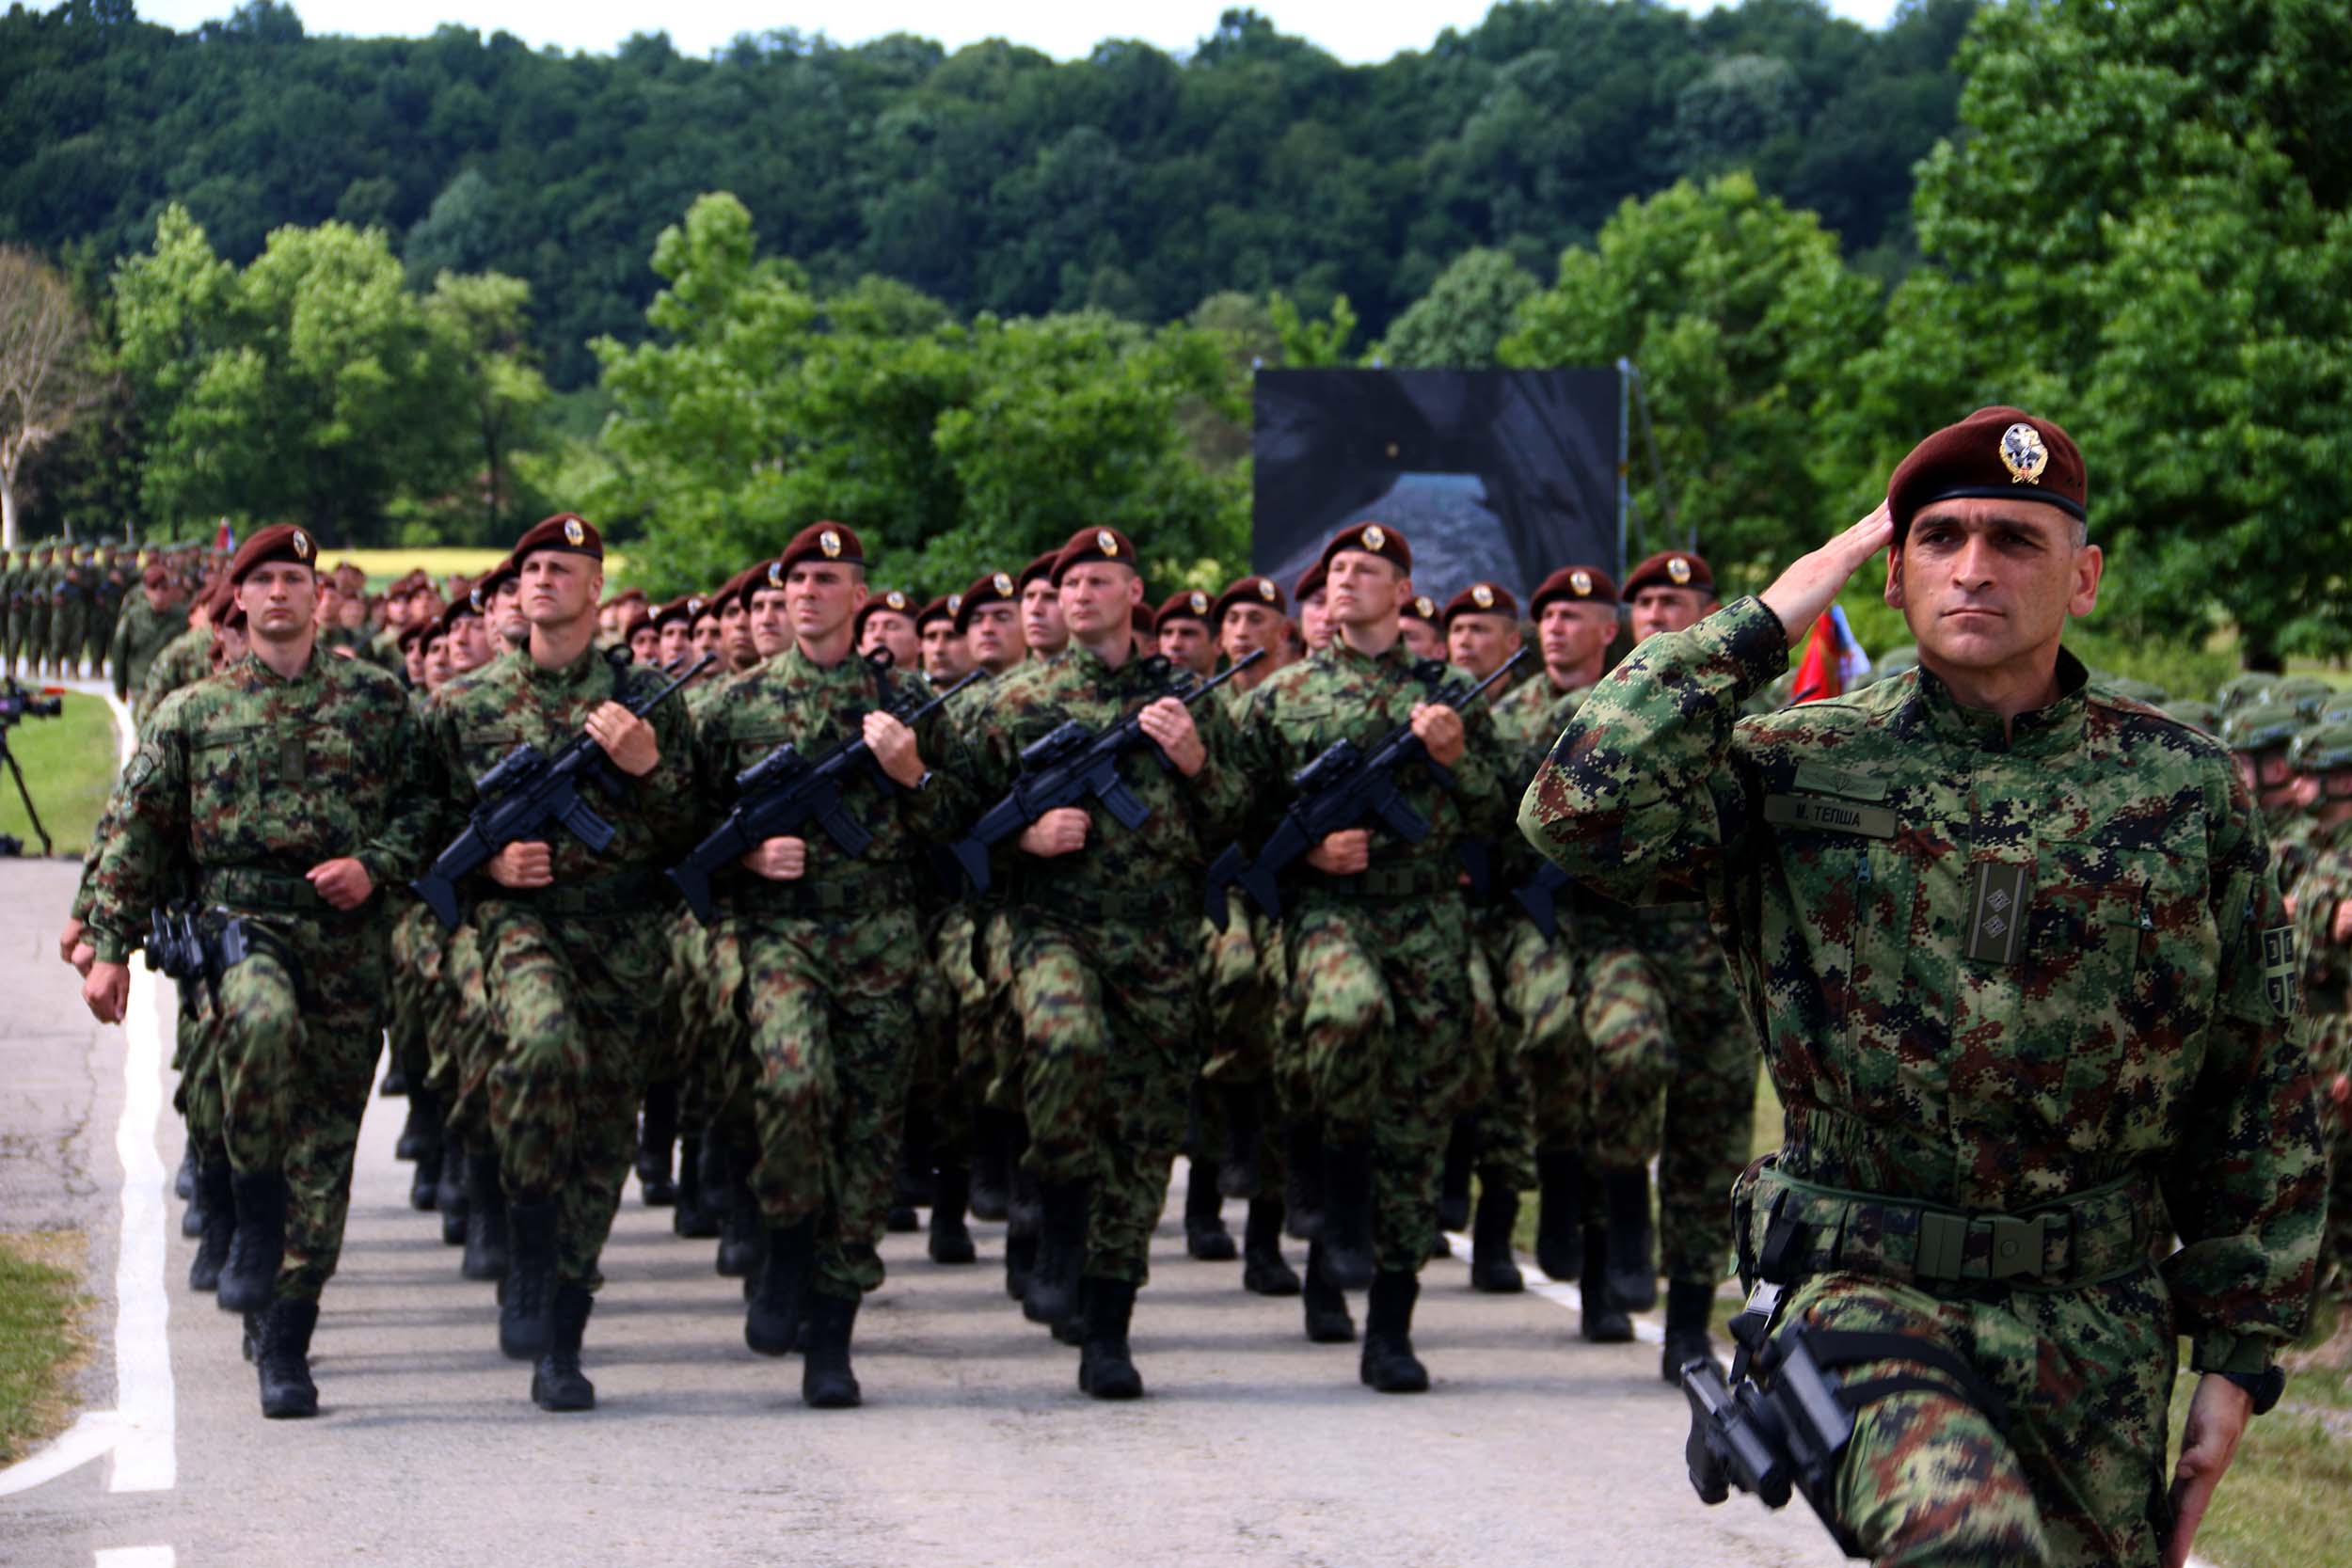 72 Бригада. Застава бригади имени Святого Георгия. 72 Бригада Орр. Специальная бригада Сербии.